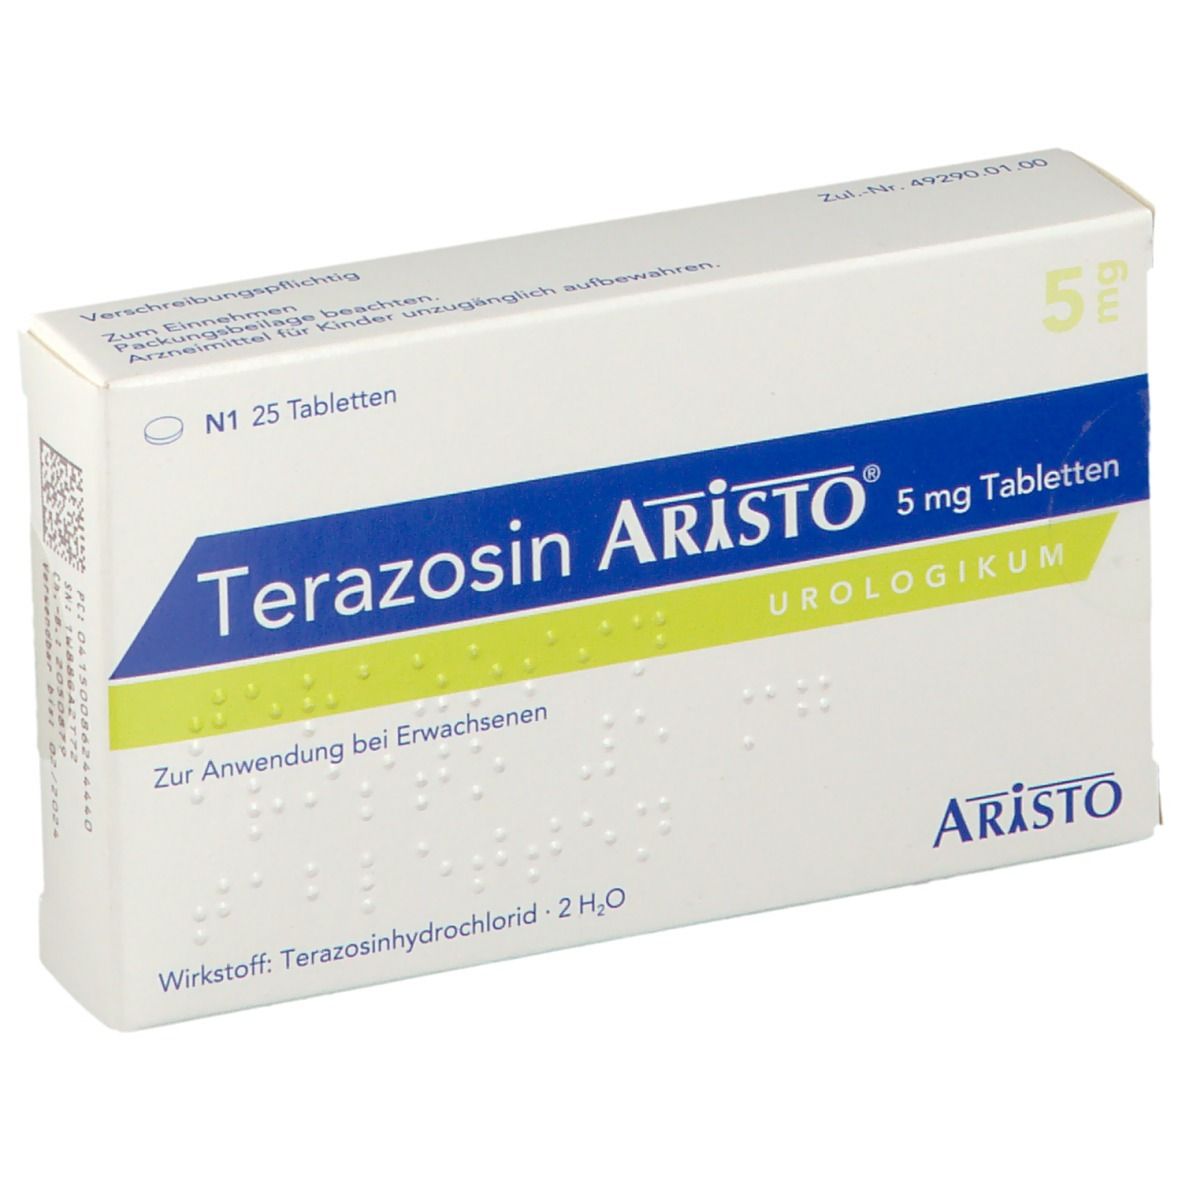 Terazosin Aristo® 5 mg